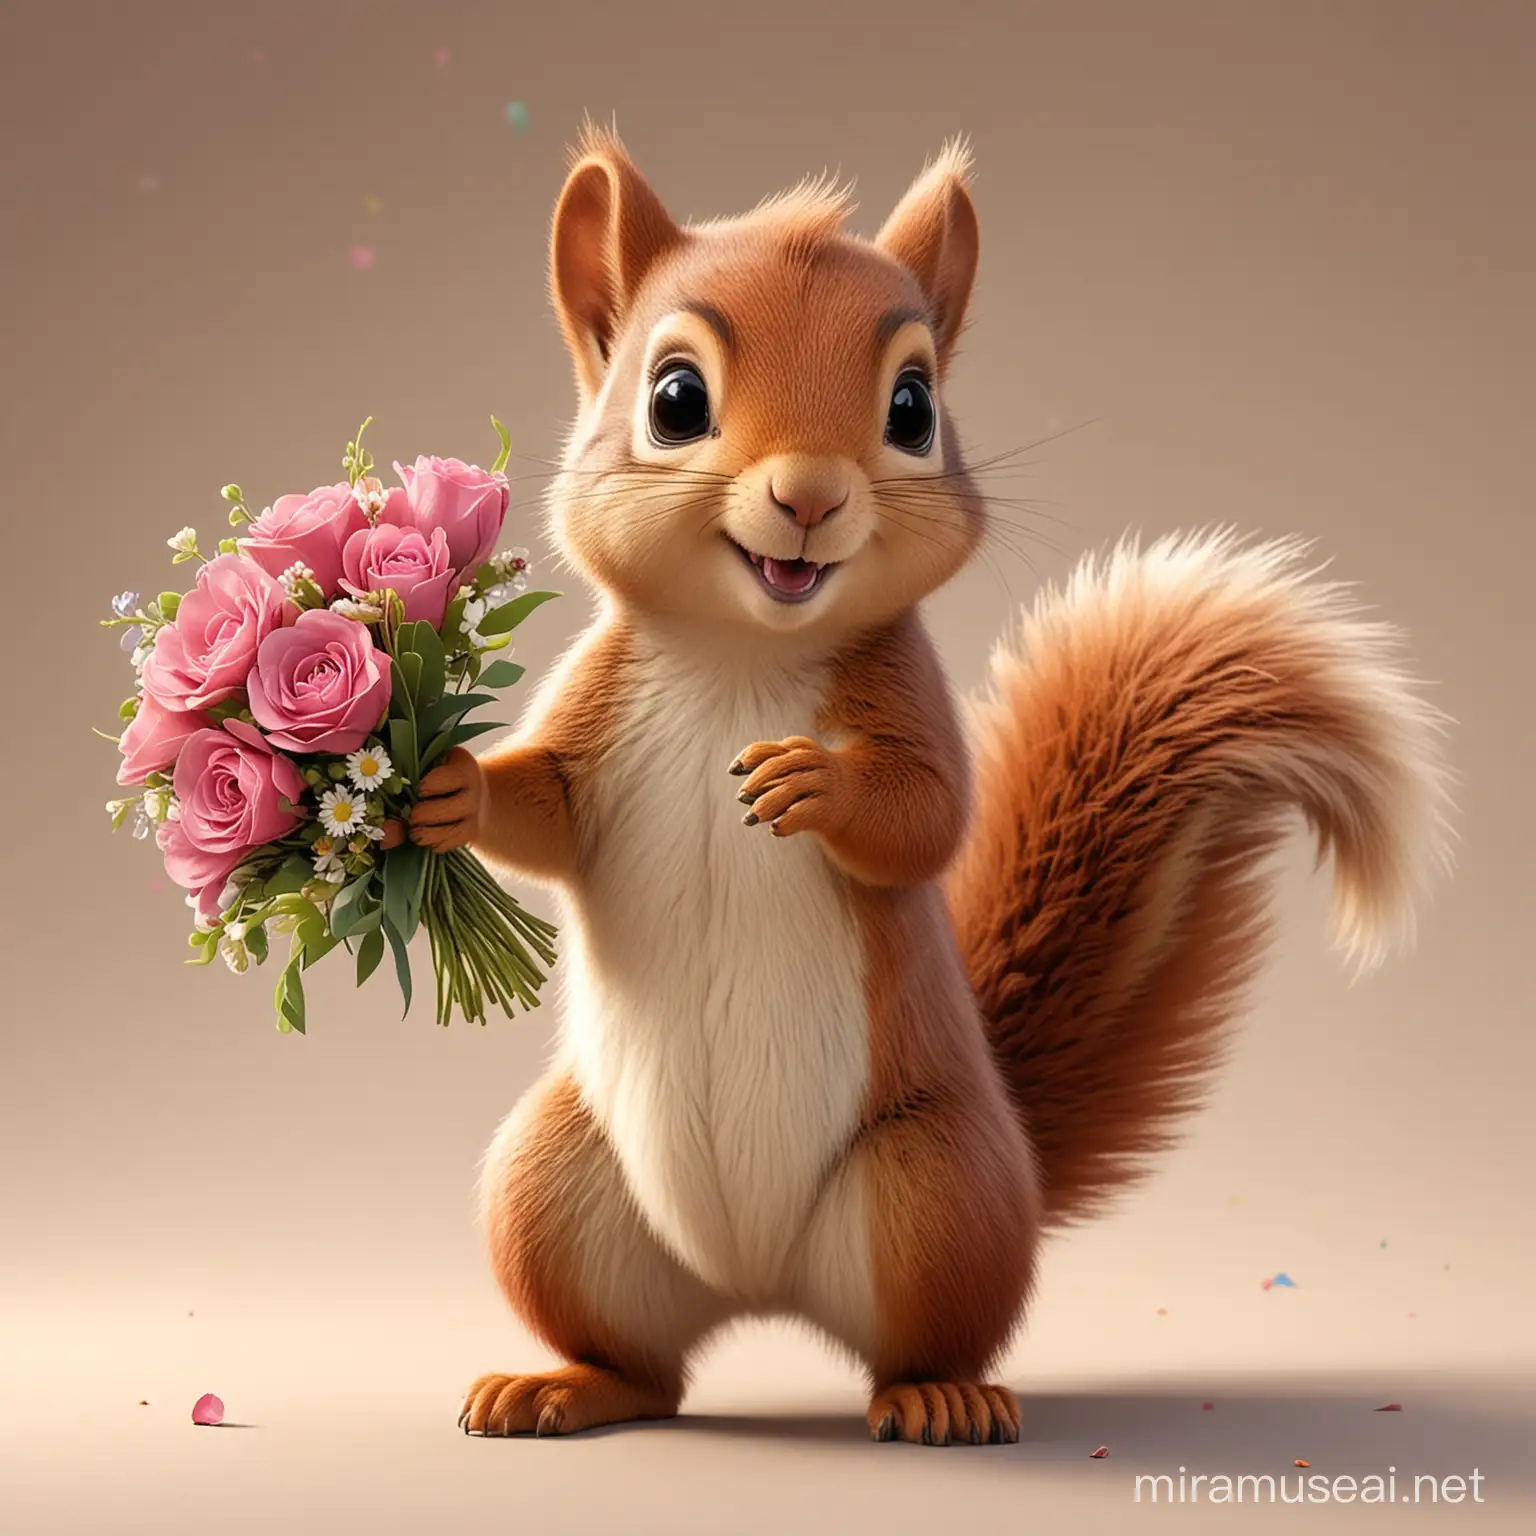 Adorable Squirrel Cub Birthday Celebration with Bouquet in Disney Pixar Style